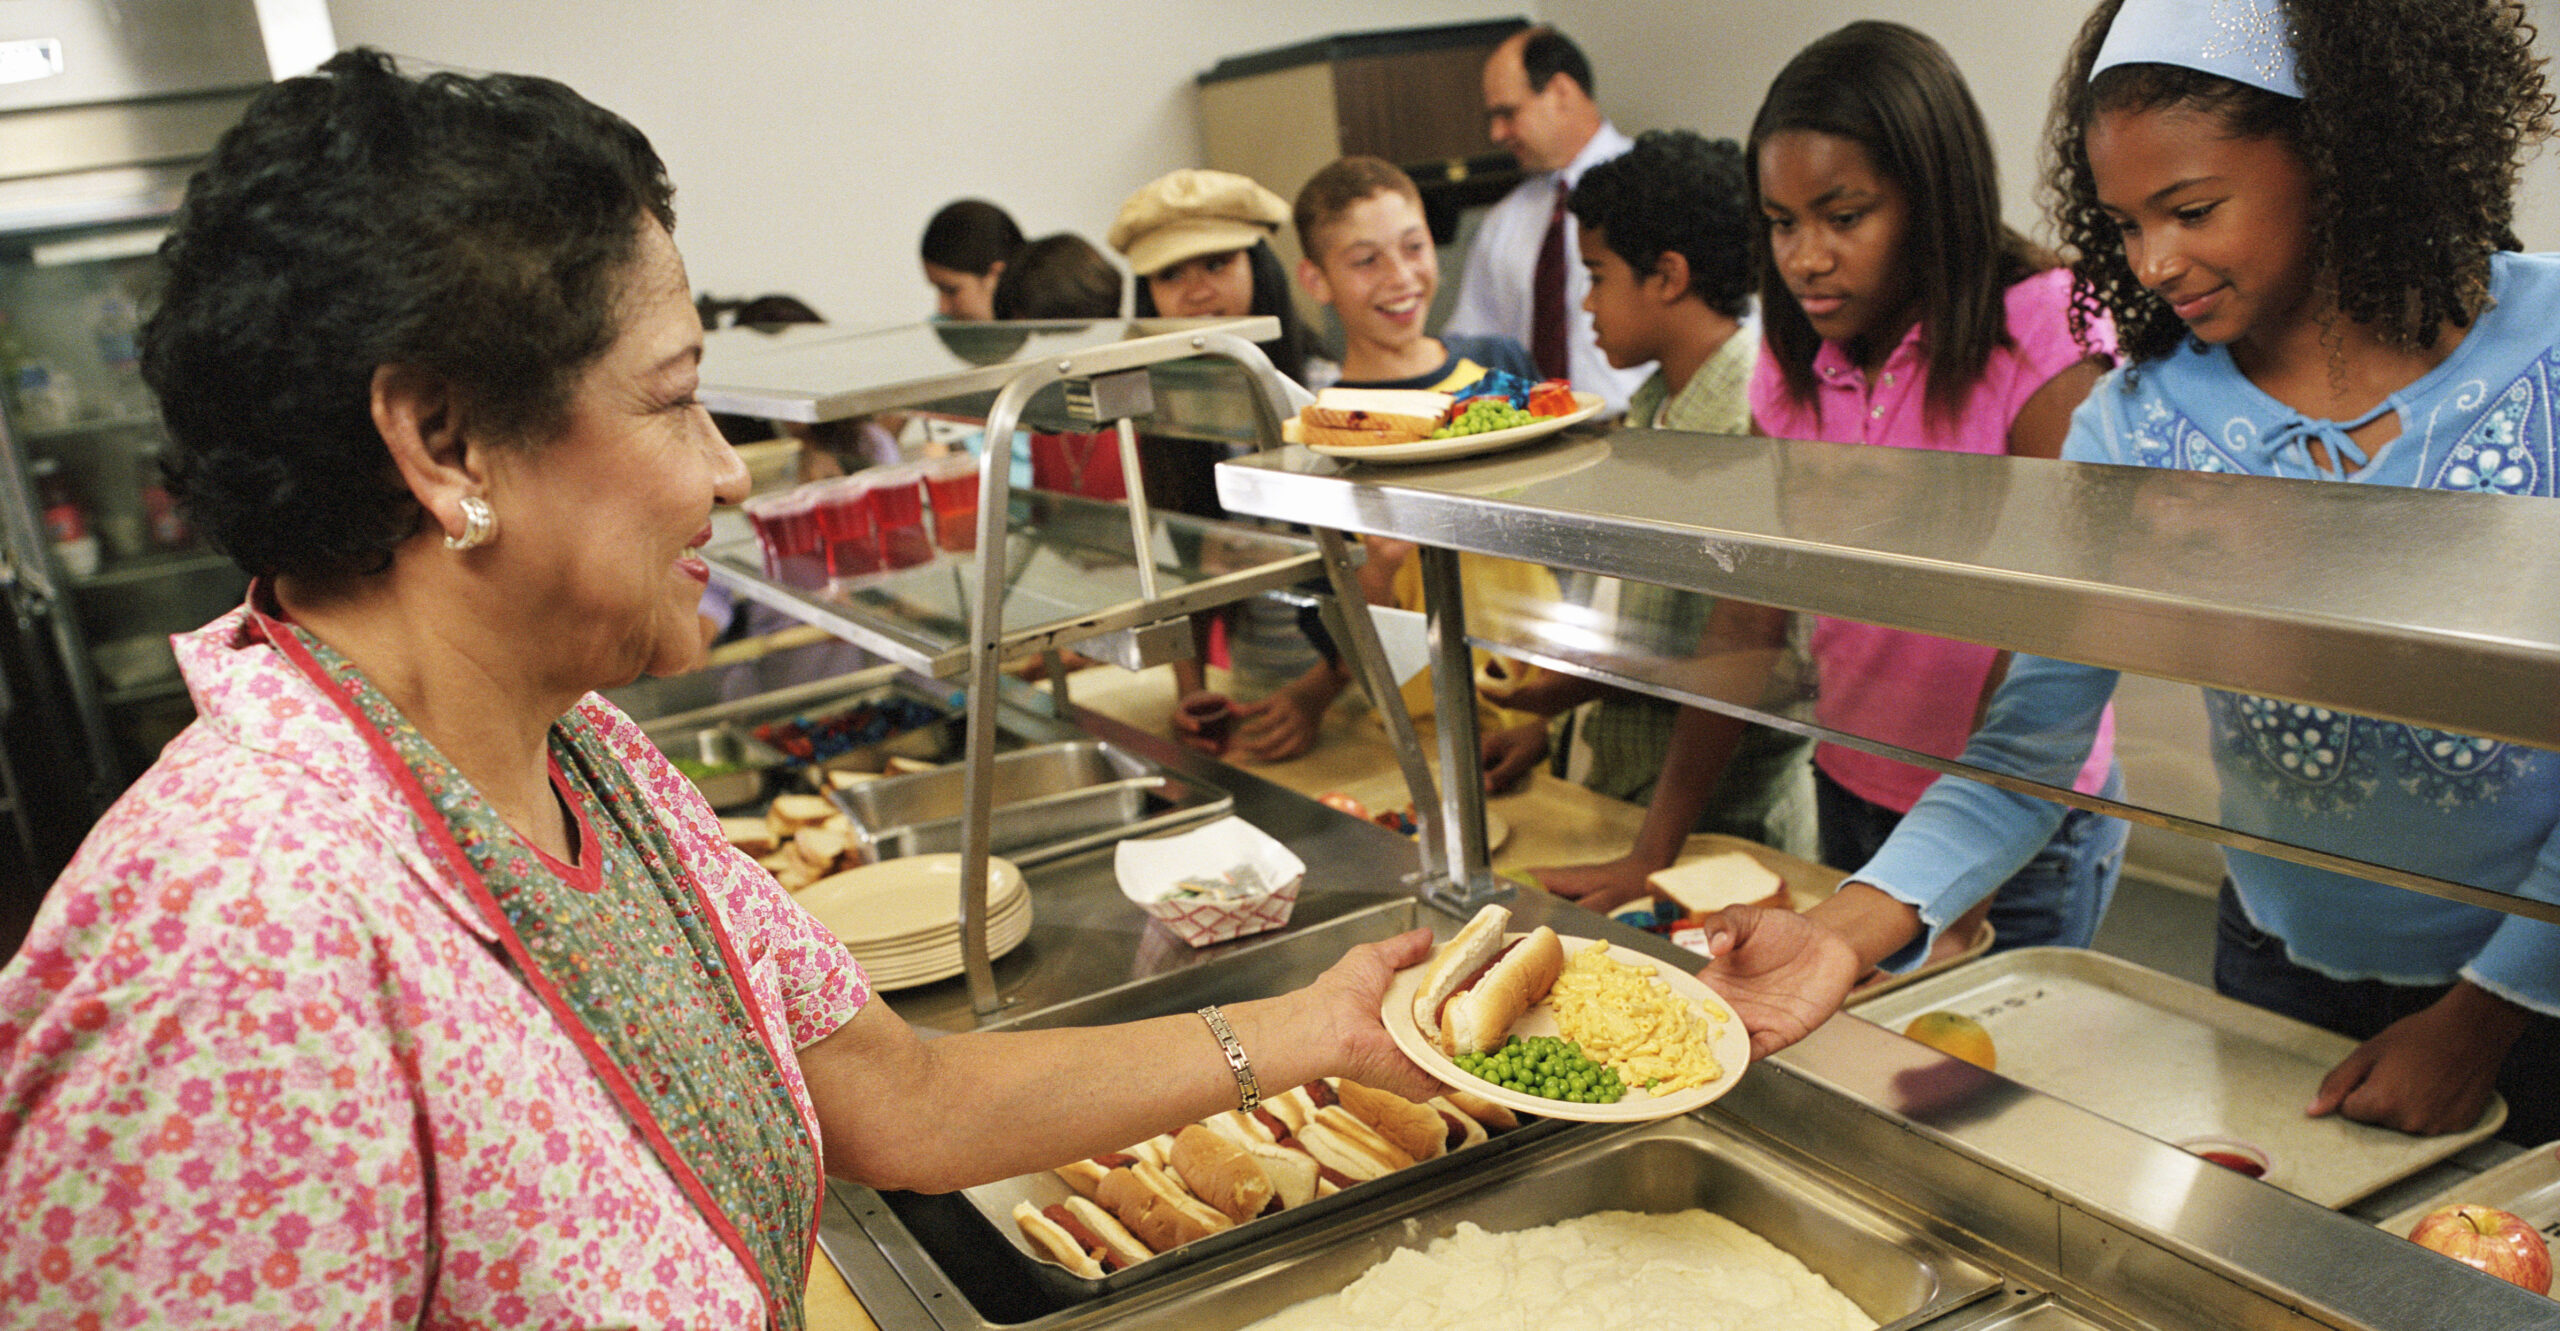 School Meals Bill Serves Up 2 Unappetizing Helpings of Left's Agenda